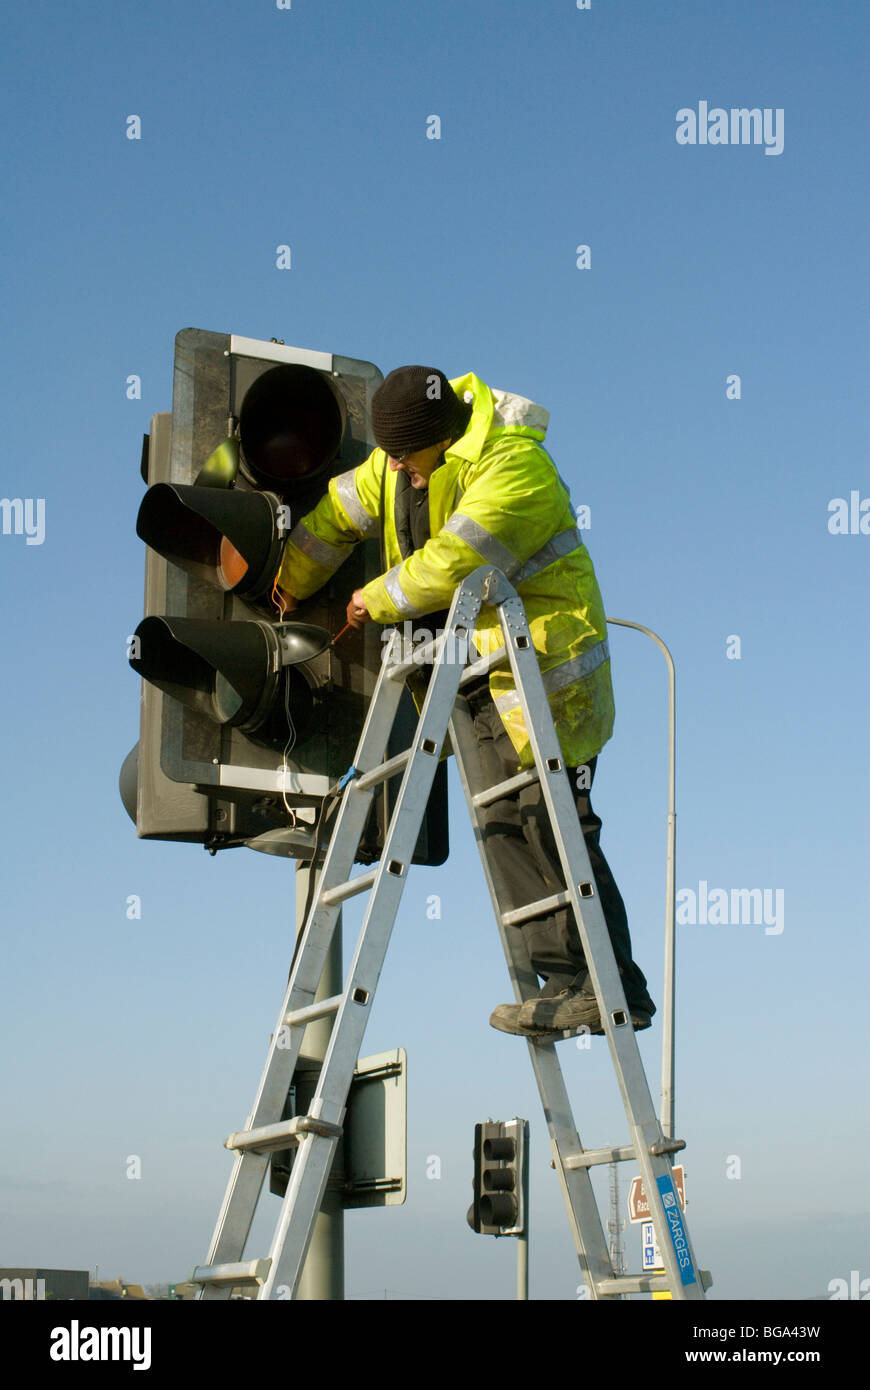 A workman fixing a set of traffic lights Stock Photo